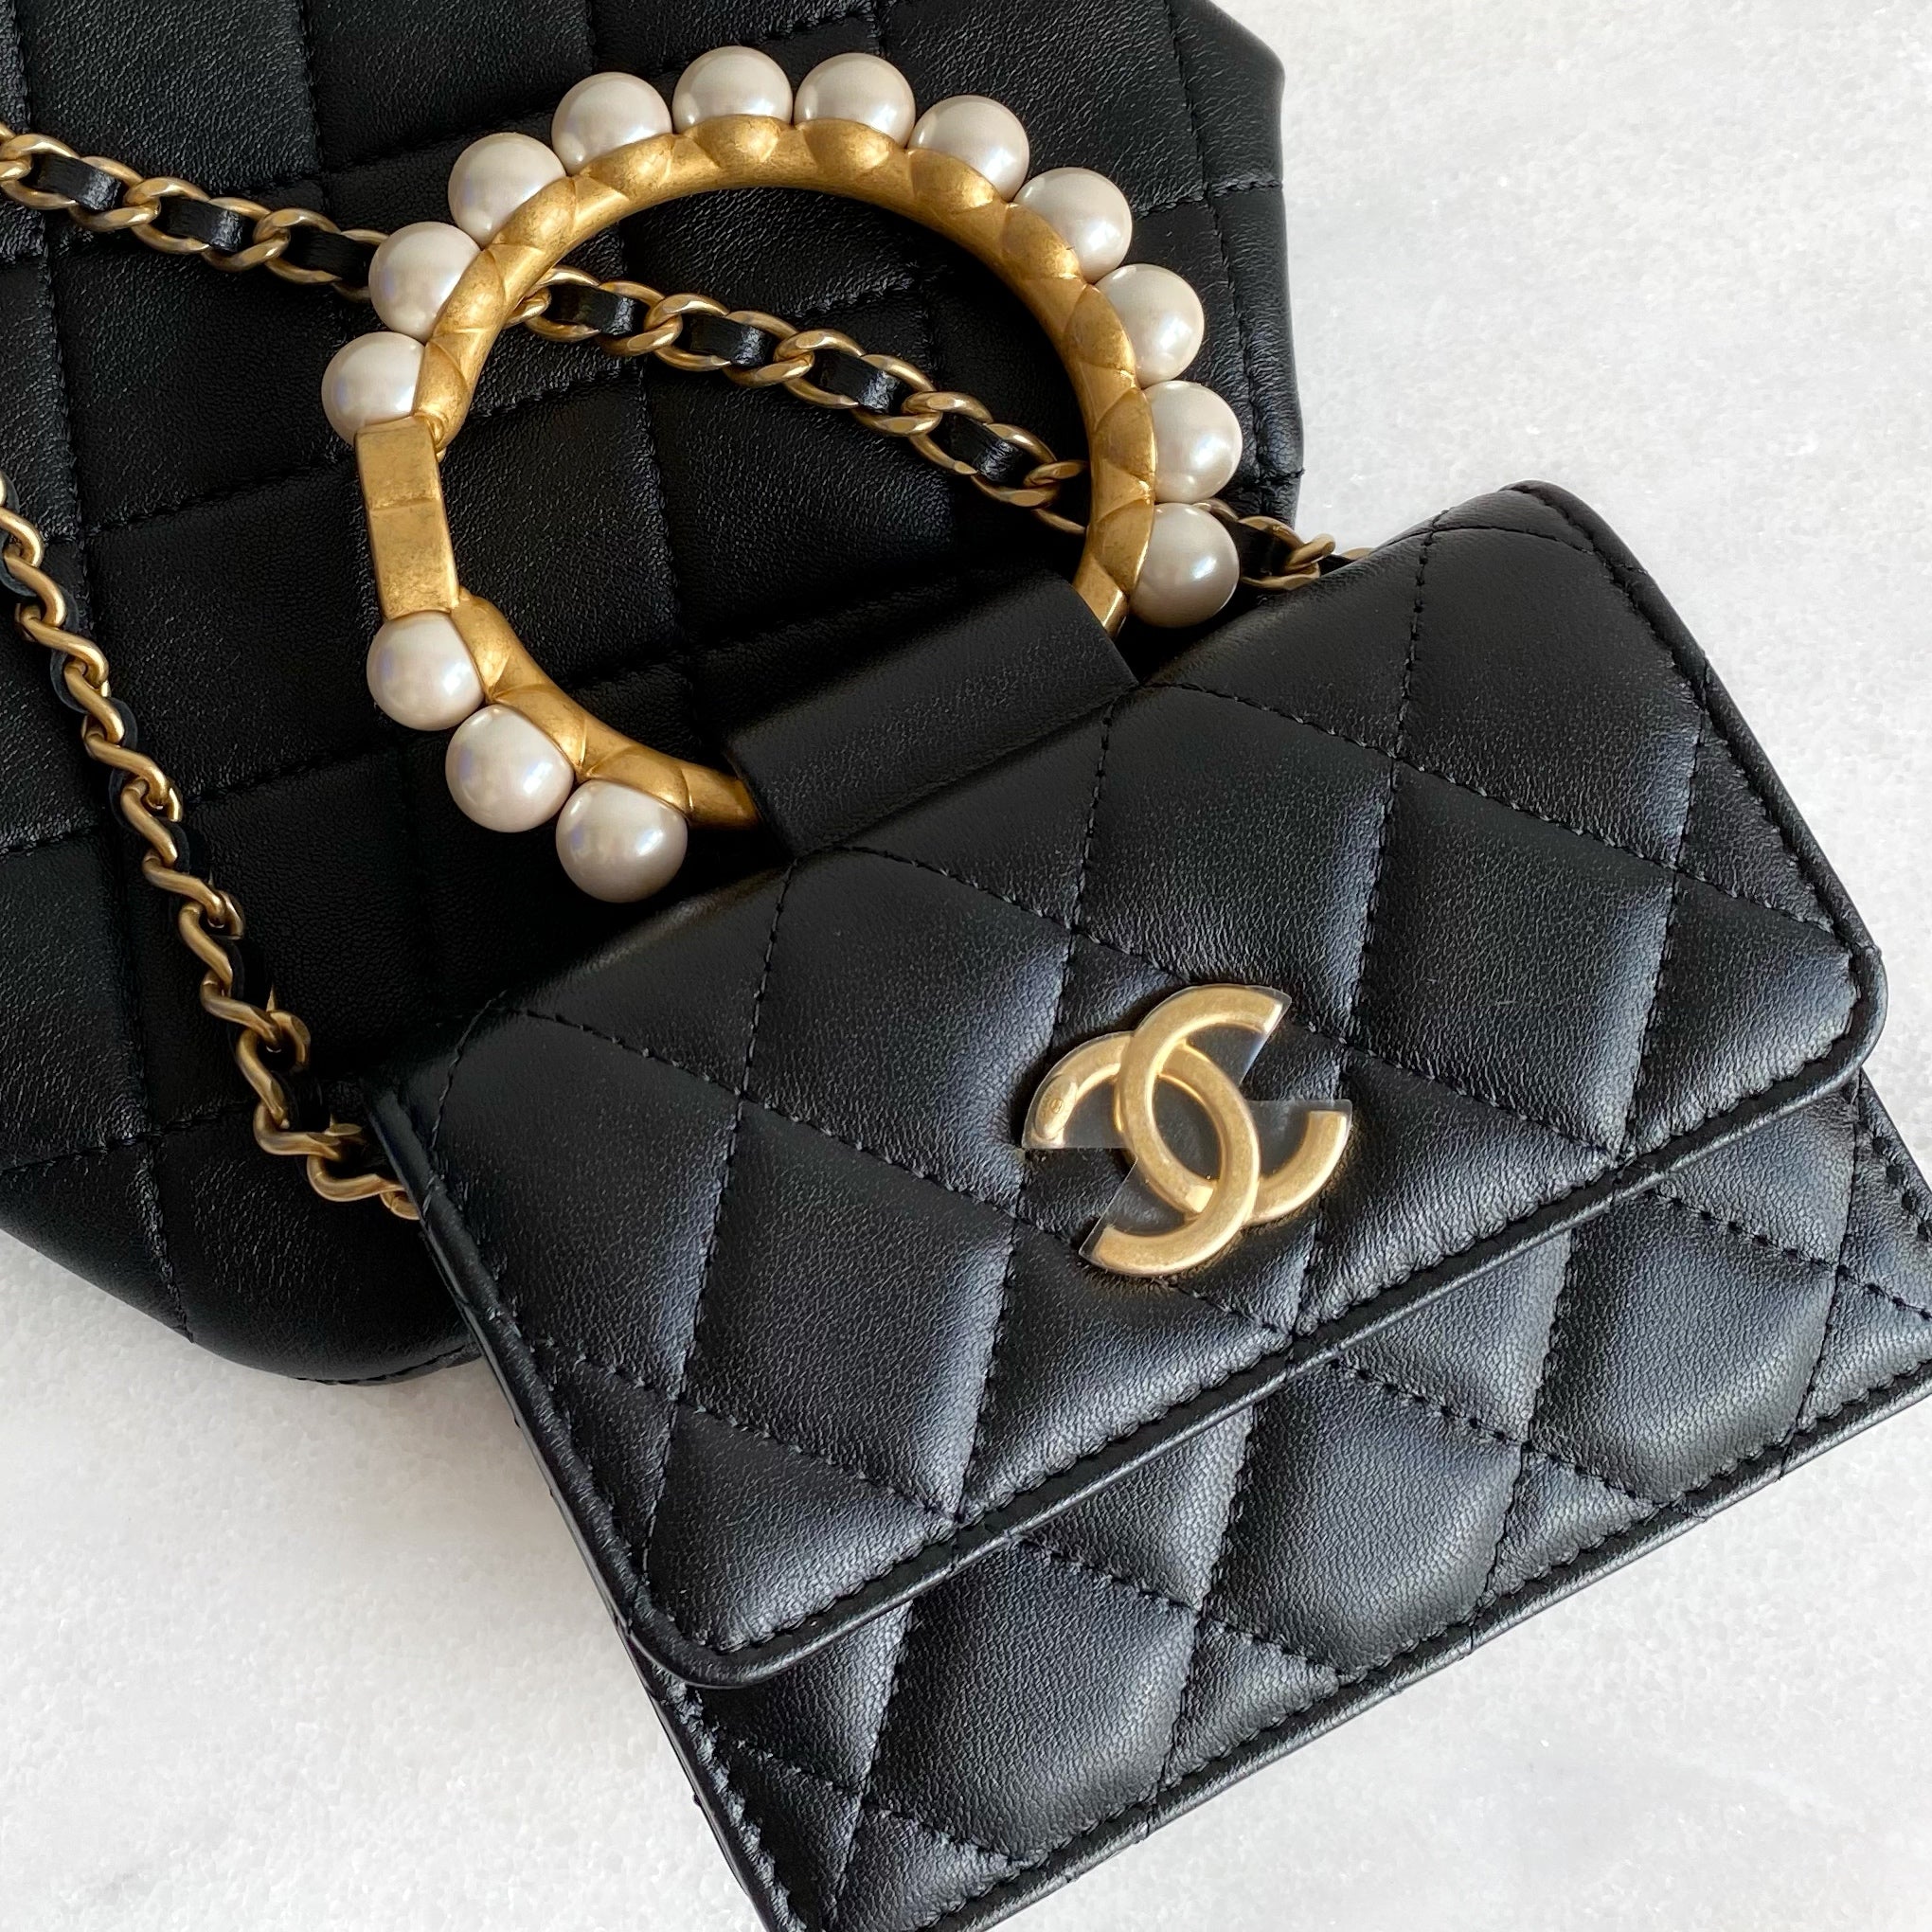 Chanel chain bag chocolate - Gem